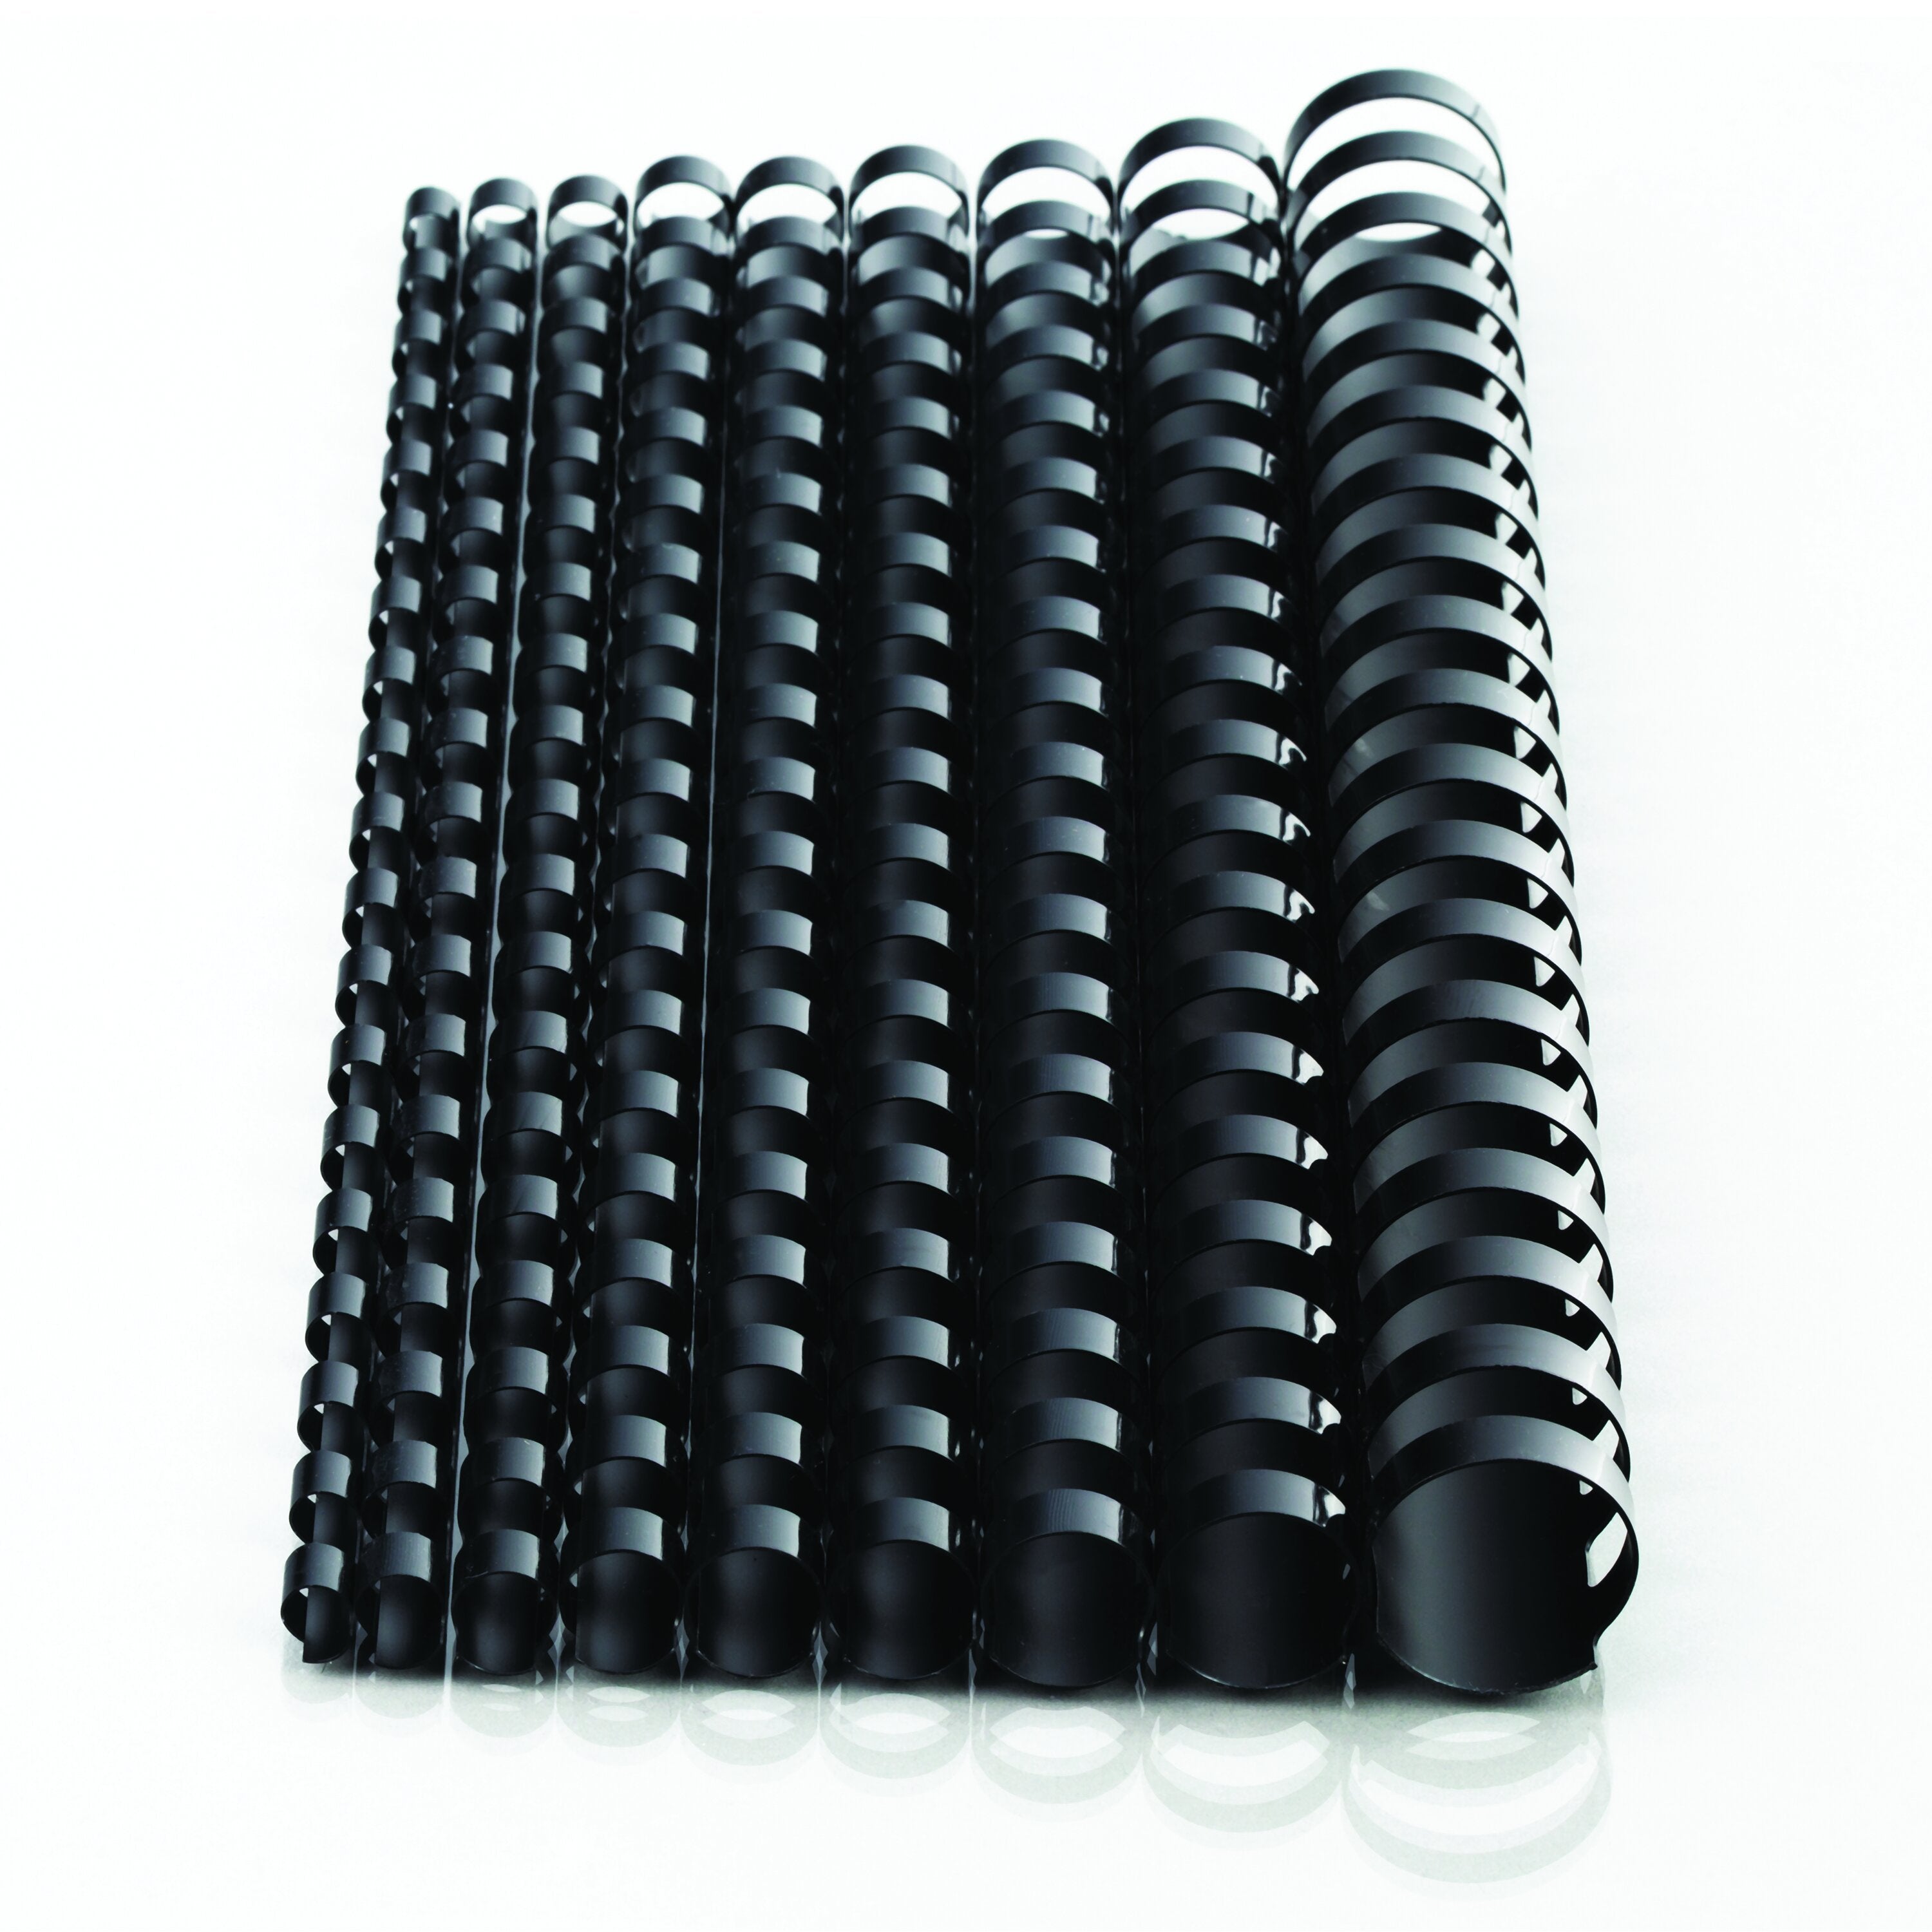 Mead CombBind Binding Spines, 5/16", Black, 125 Pack